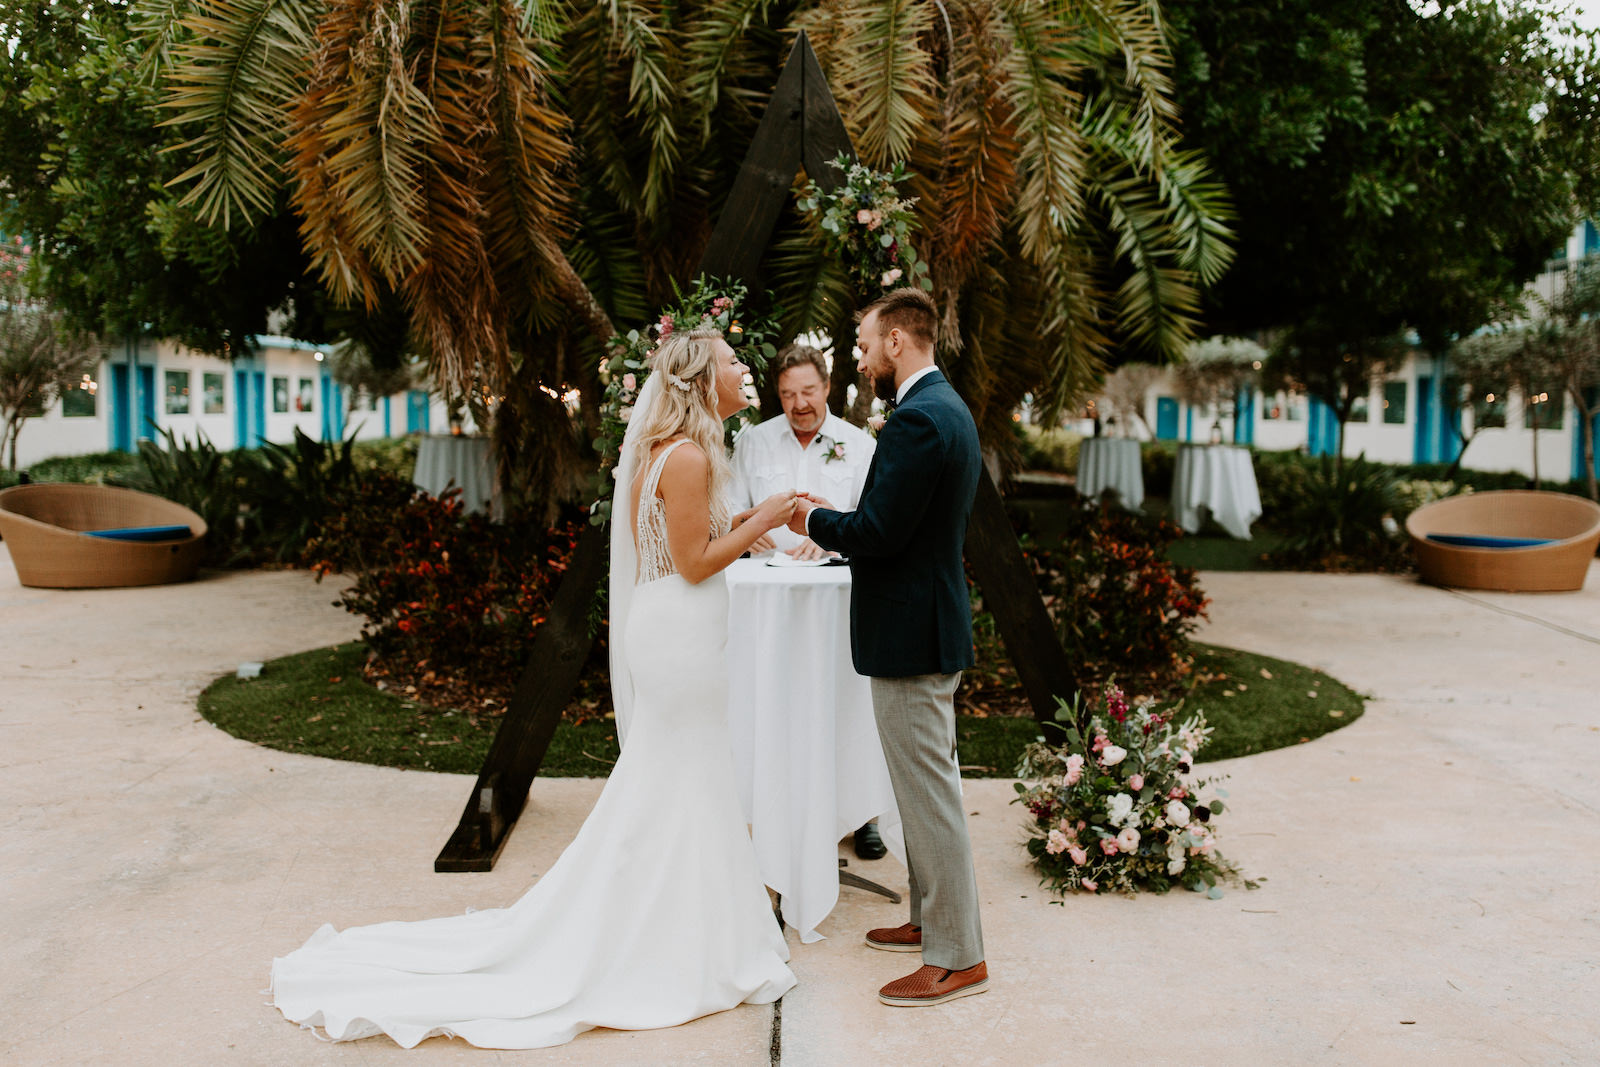 Tropical Garden Bride and Groom Exchanging Wedding Vows During Outdoor Wedding Ceremony | St. Pete Wedding Venue Postcard Inn